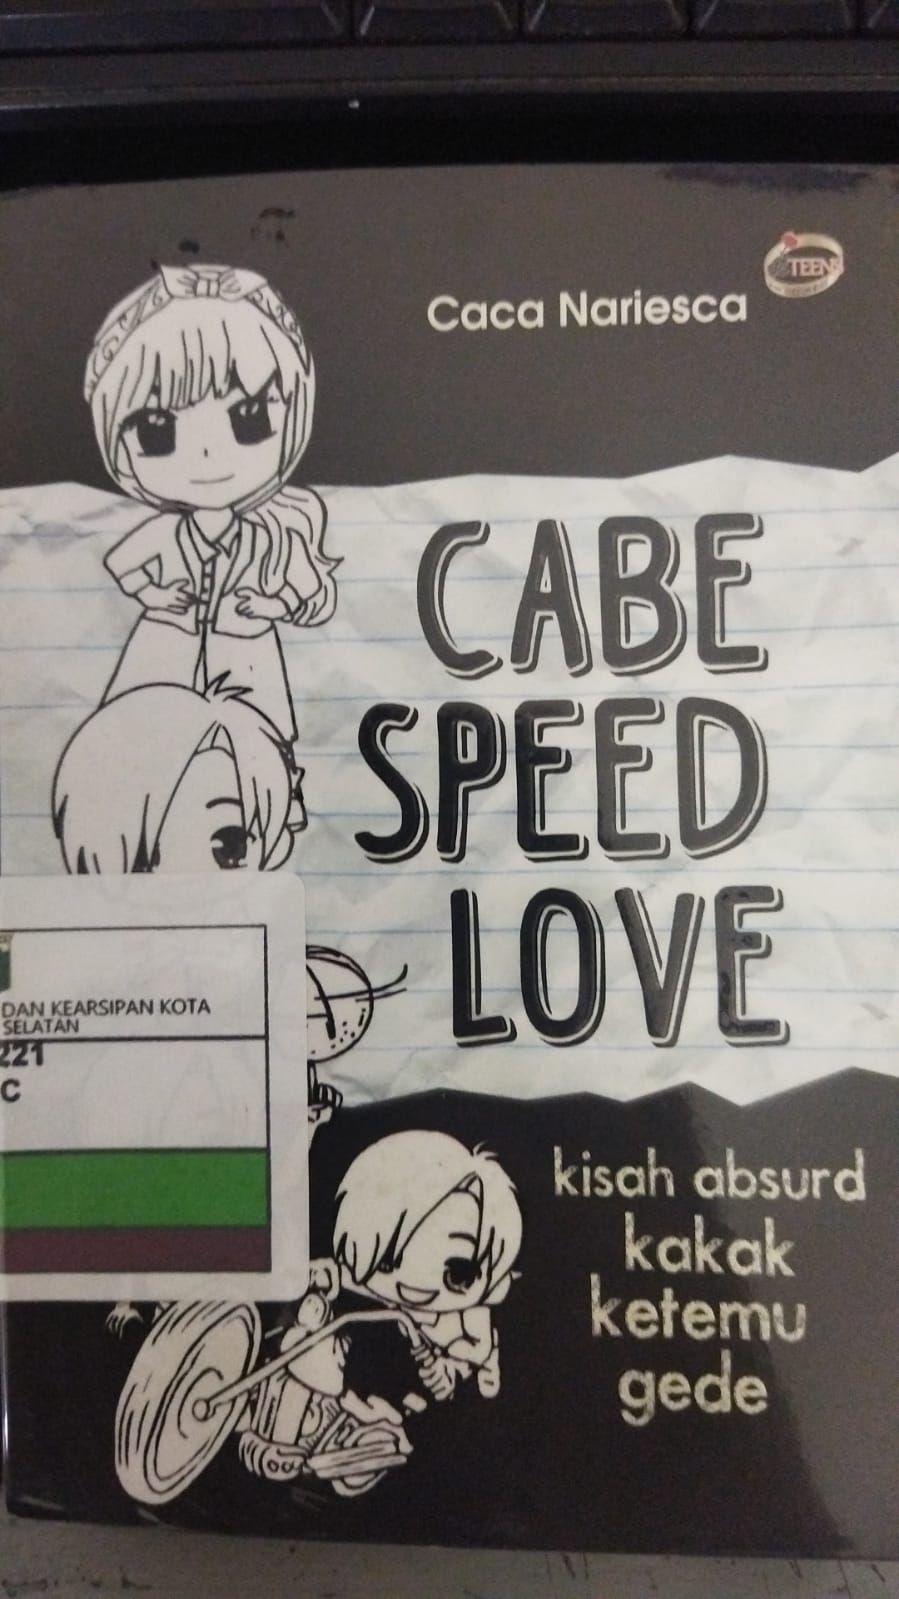 Cabe speed love